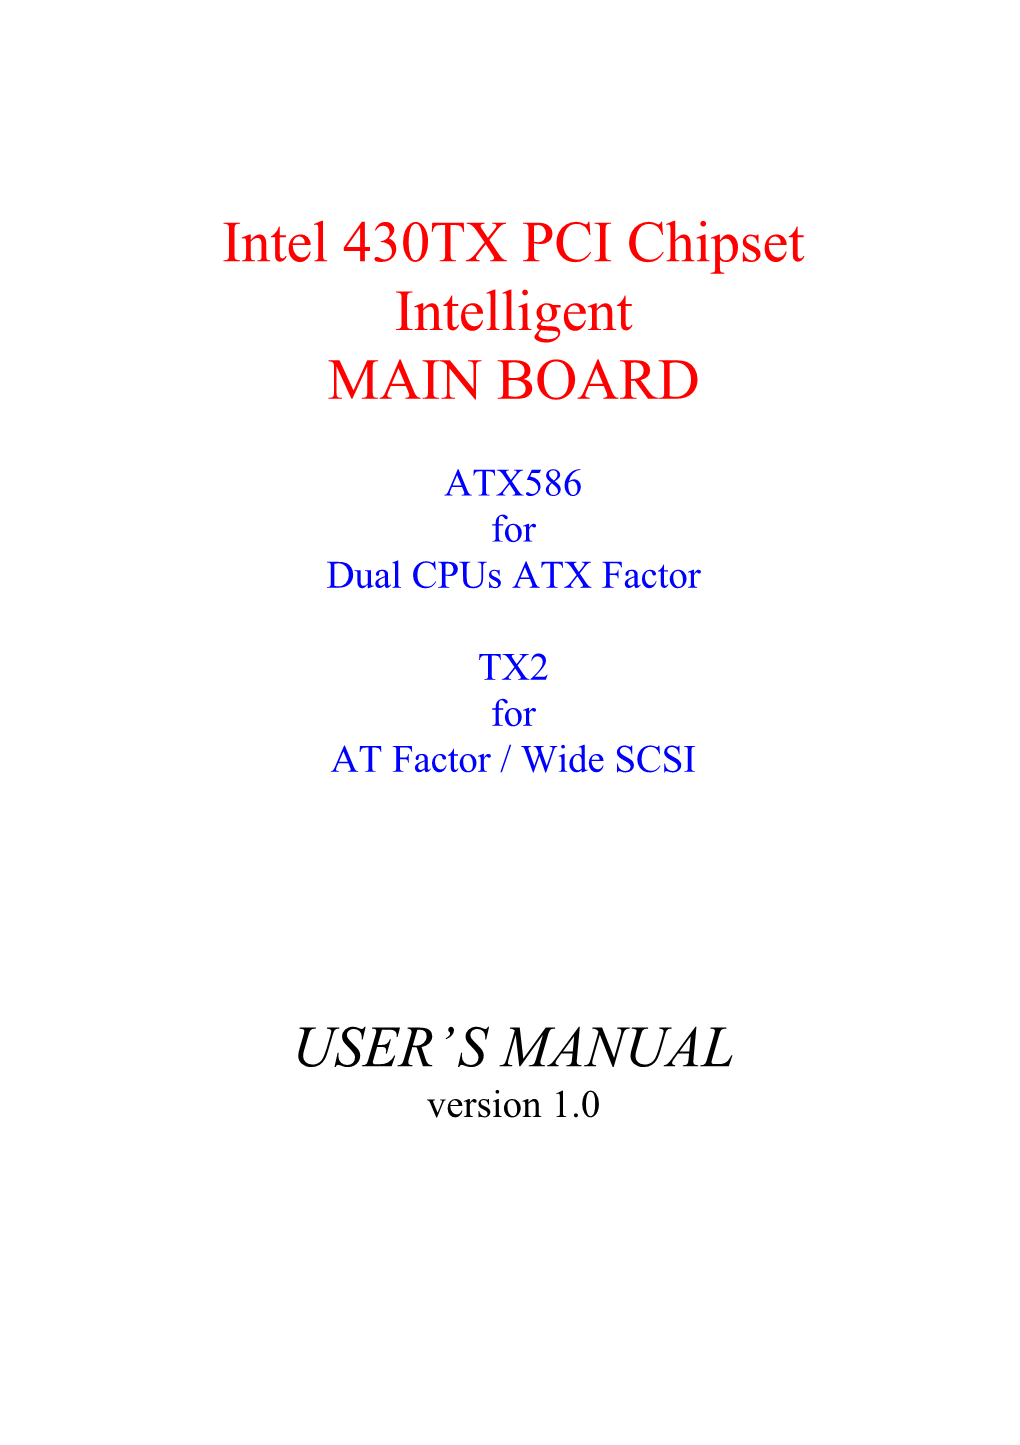 Intel 430TX PCI Chipset Intelligent MAIN BOARD USER's MANUAL